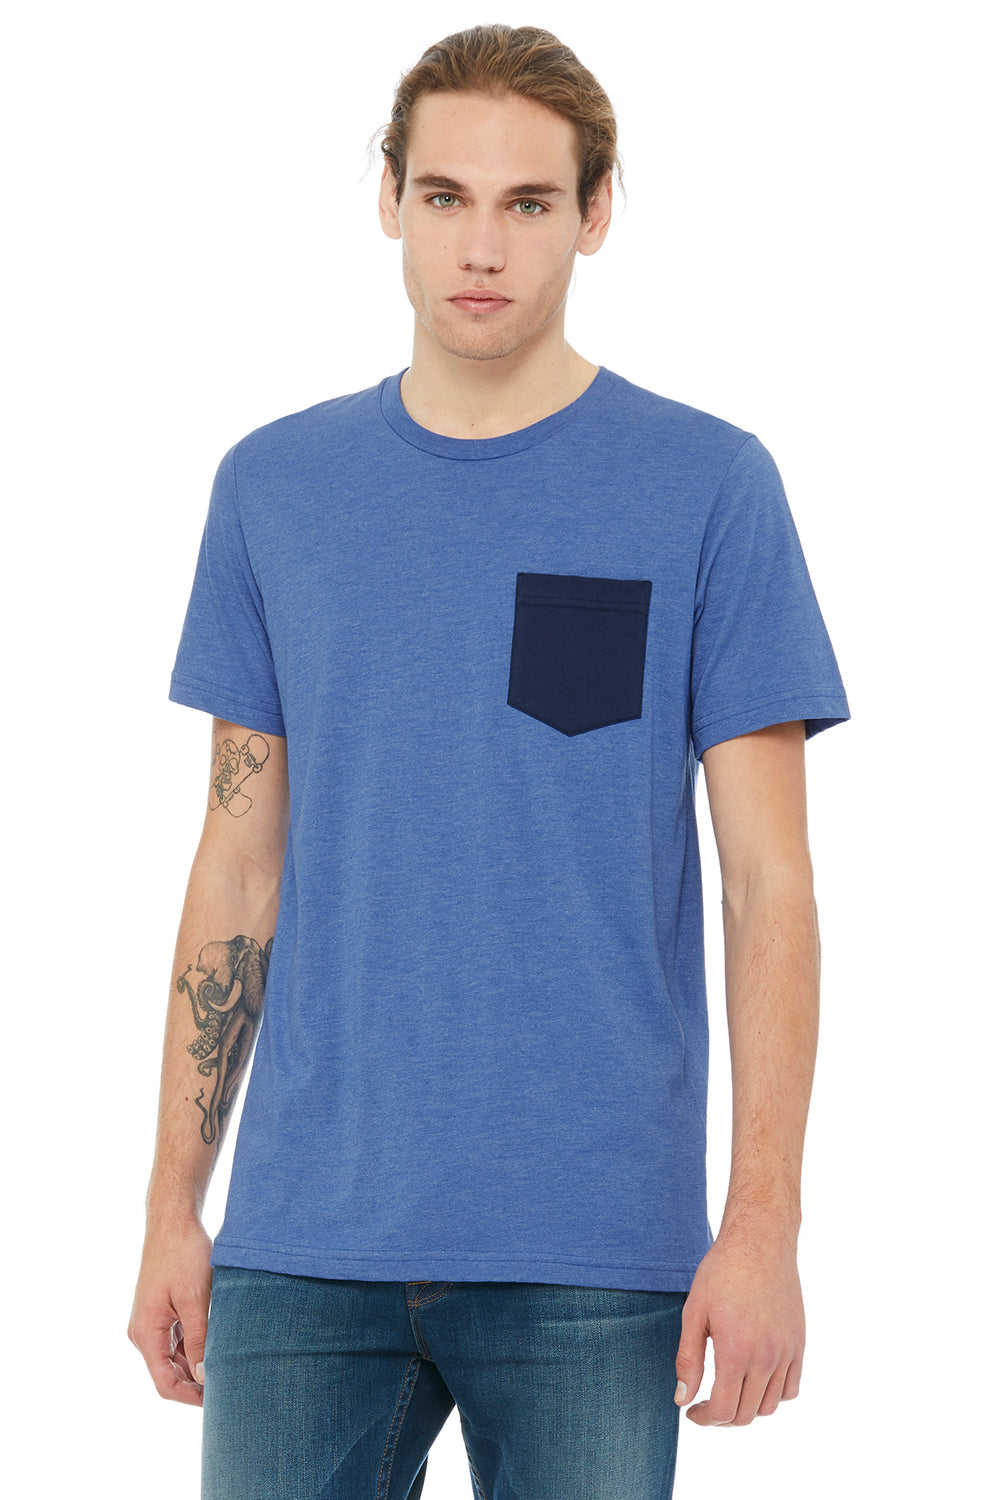 Bella + Canvas 3021 Mens Jersey Short Sleeve Crewneck T-Shirt w/ Pocket Heather Royal Blue/Navy Blue Front